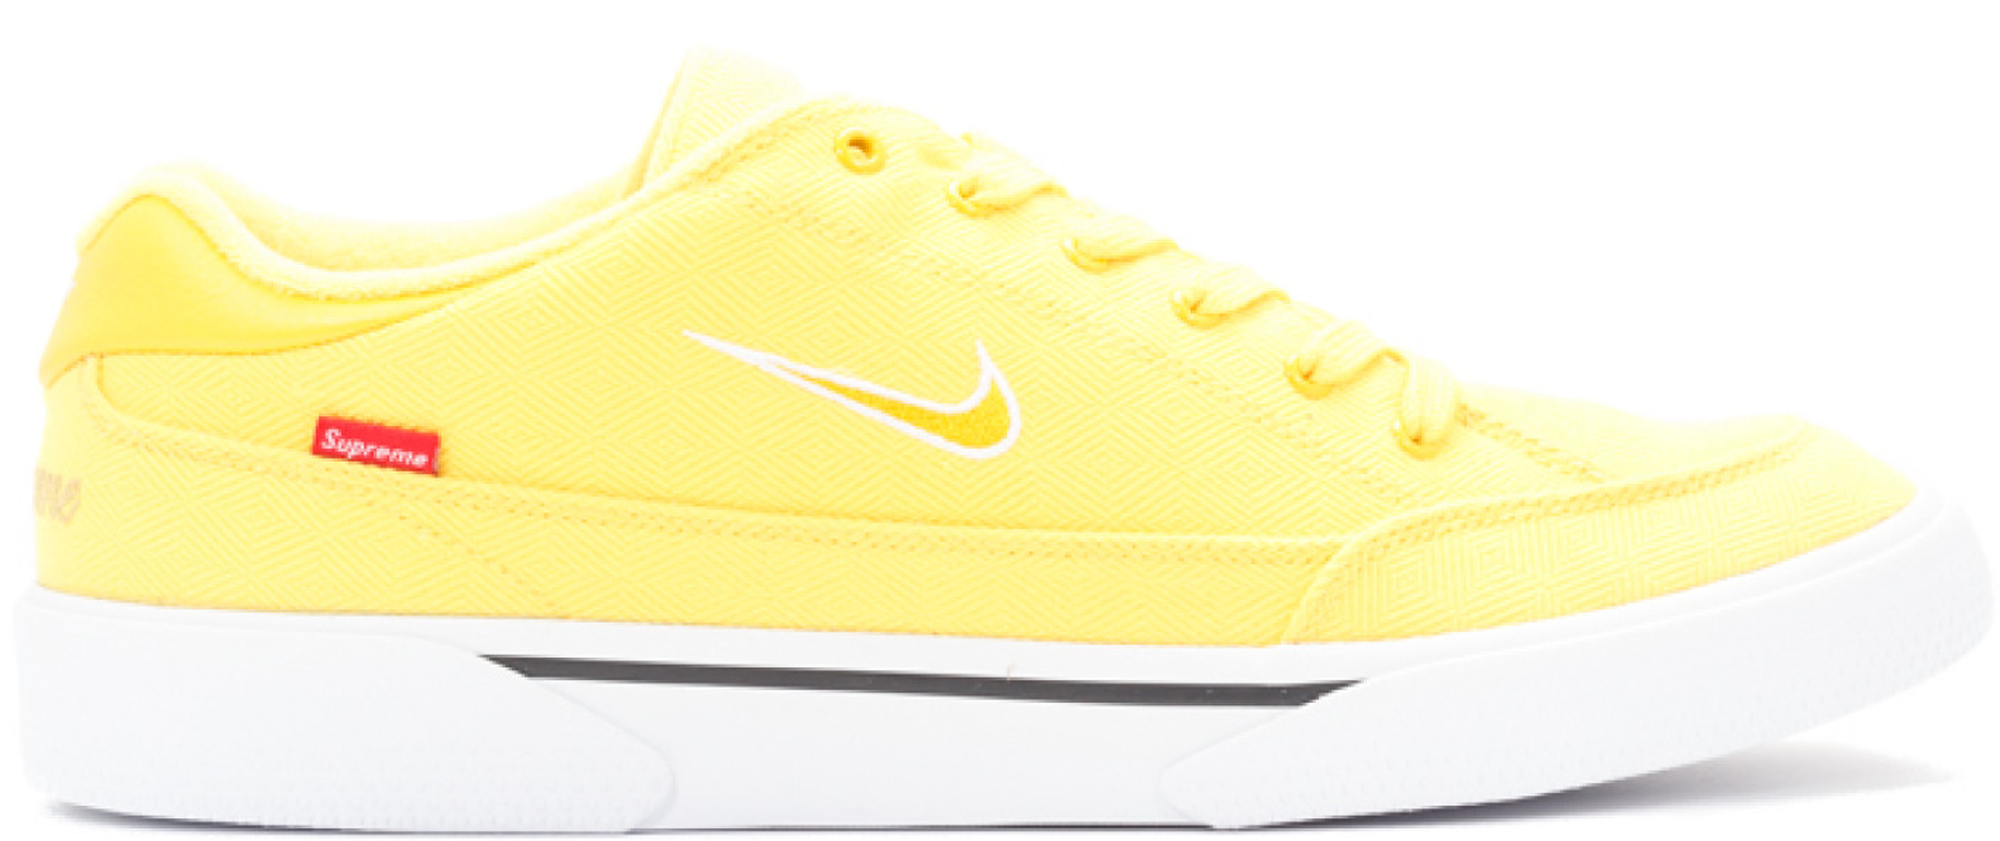 Nike SB GTS Supreme Yellow - 801621-771